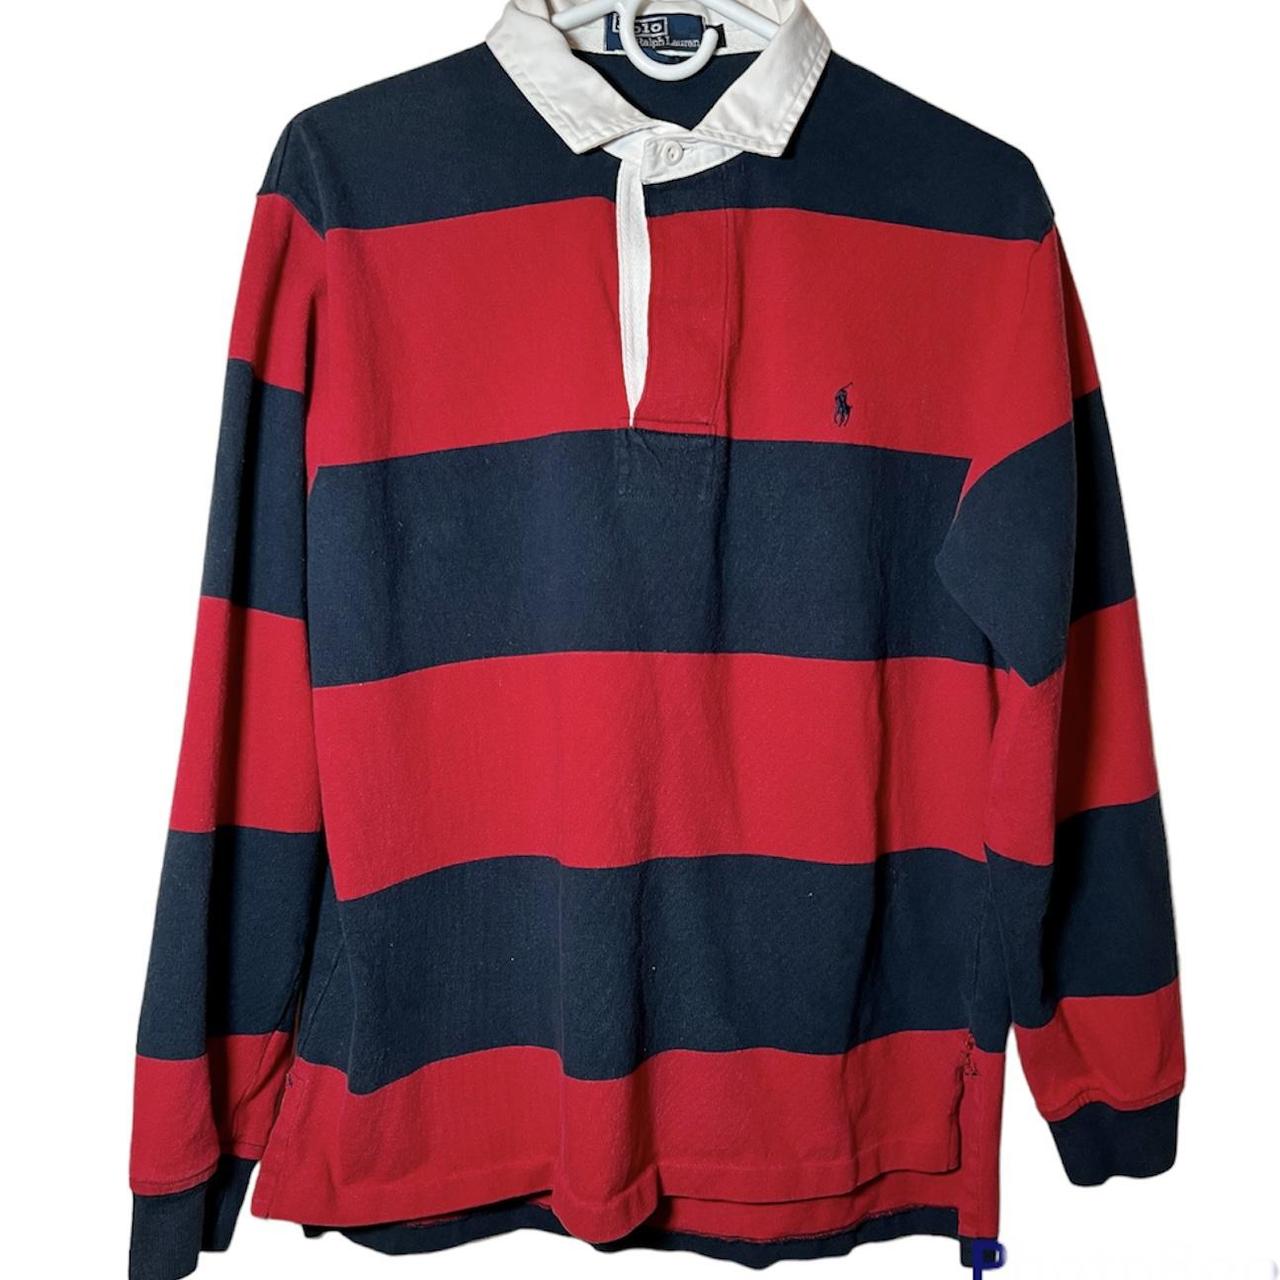 Vintage Ralph Lauren Rugby Shirt Red Navy Striped... - Depop